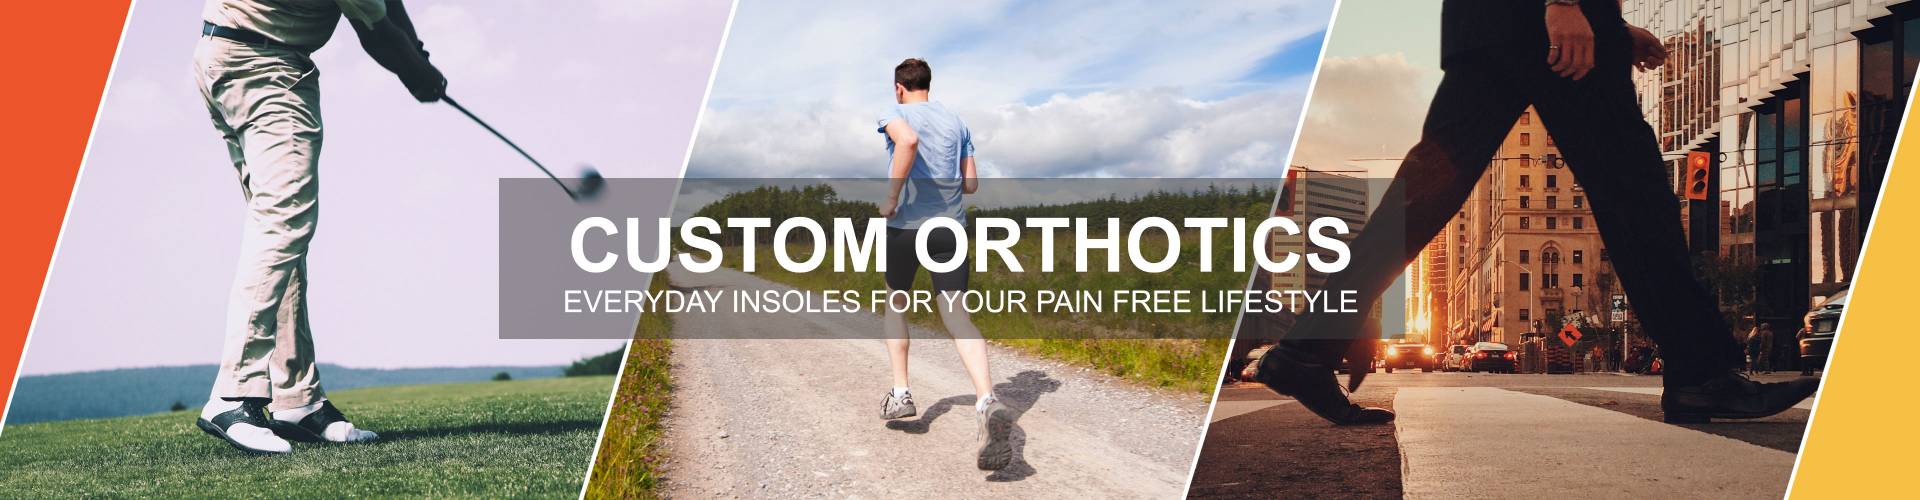 Custom Orthotics For a Pain Free Lifestyle